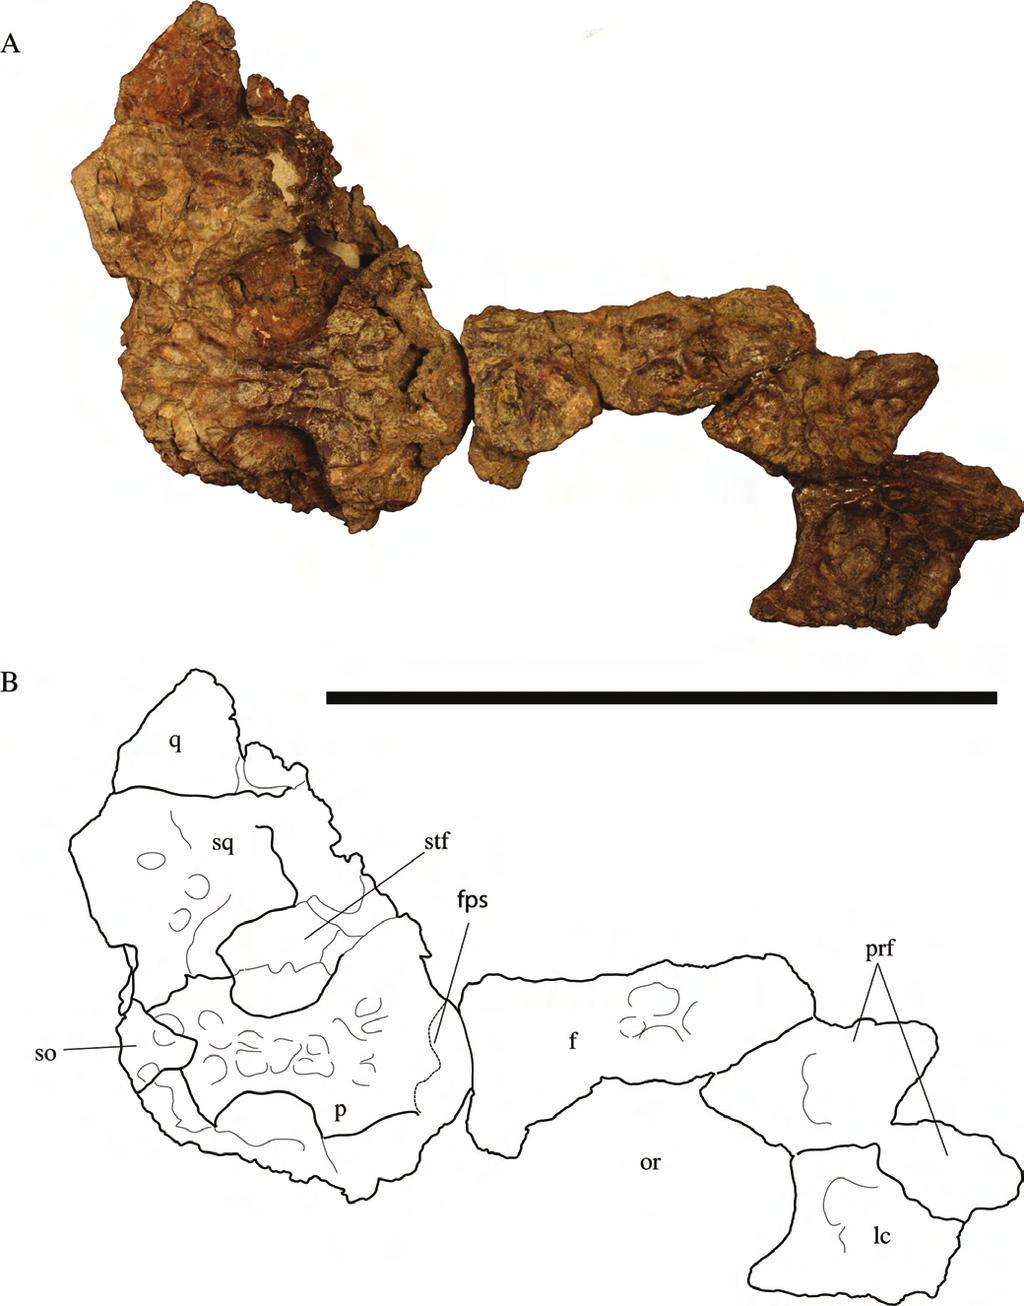 JOURNAL OF VERTEBRATE PALEONTOLOGY, VOL. 33, NO. 2, 2013 242 FIGURE 3. Holotype of Culebrasuchus mesoamericanus, gen. et sp. nov. (UF 244434), from the early Miocene Culebra Formation of Panama.